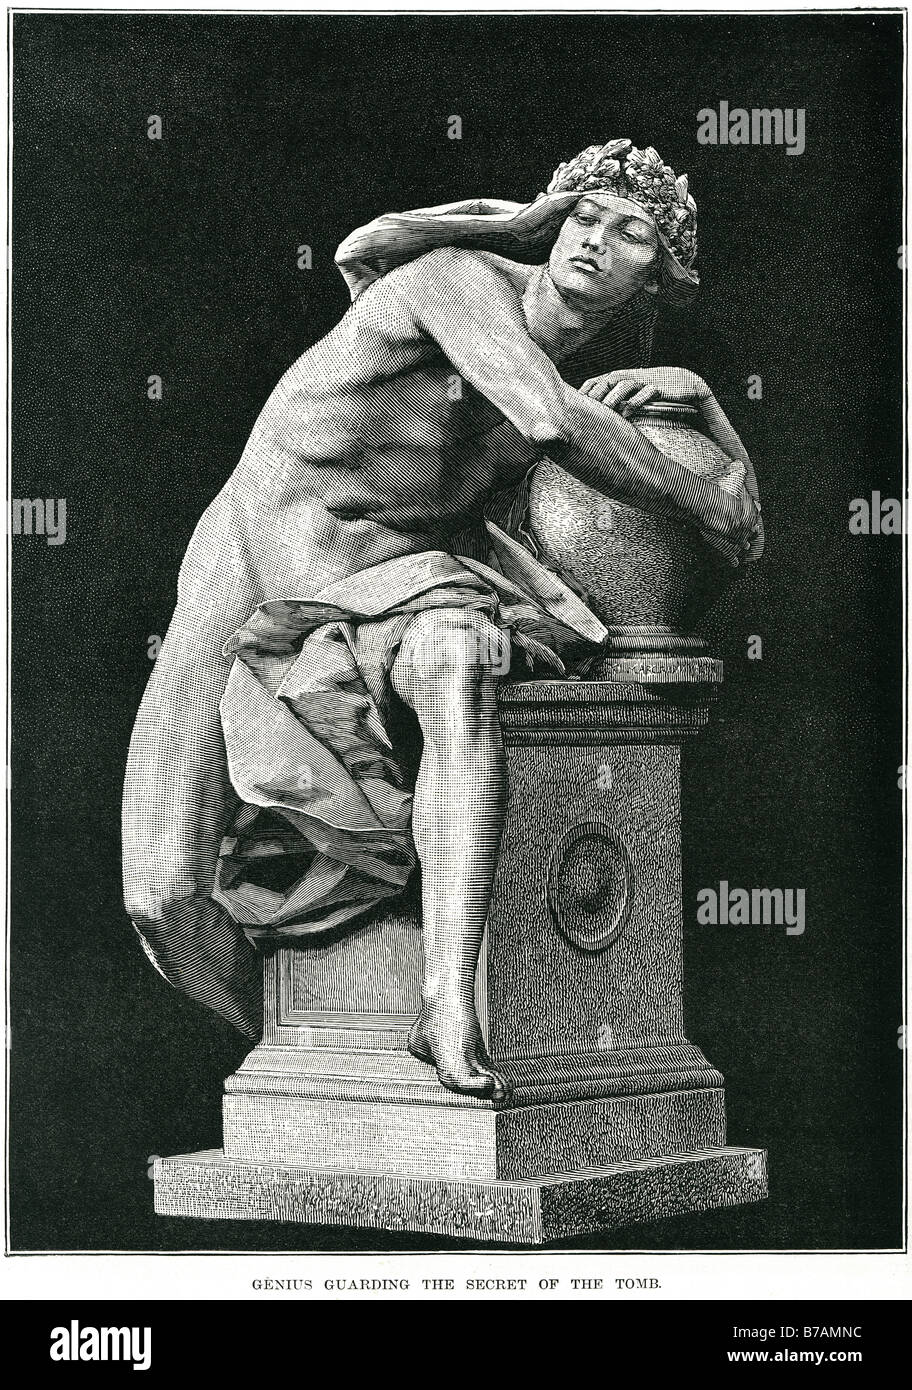 Genie Bewachung geheime Grab steinerne Statue Schnitzerei Skulptur Charles René de Paul de Saint-Marceaux 1845 1915 Frankreich Stockfoto